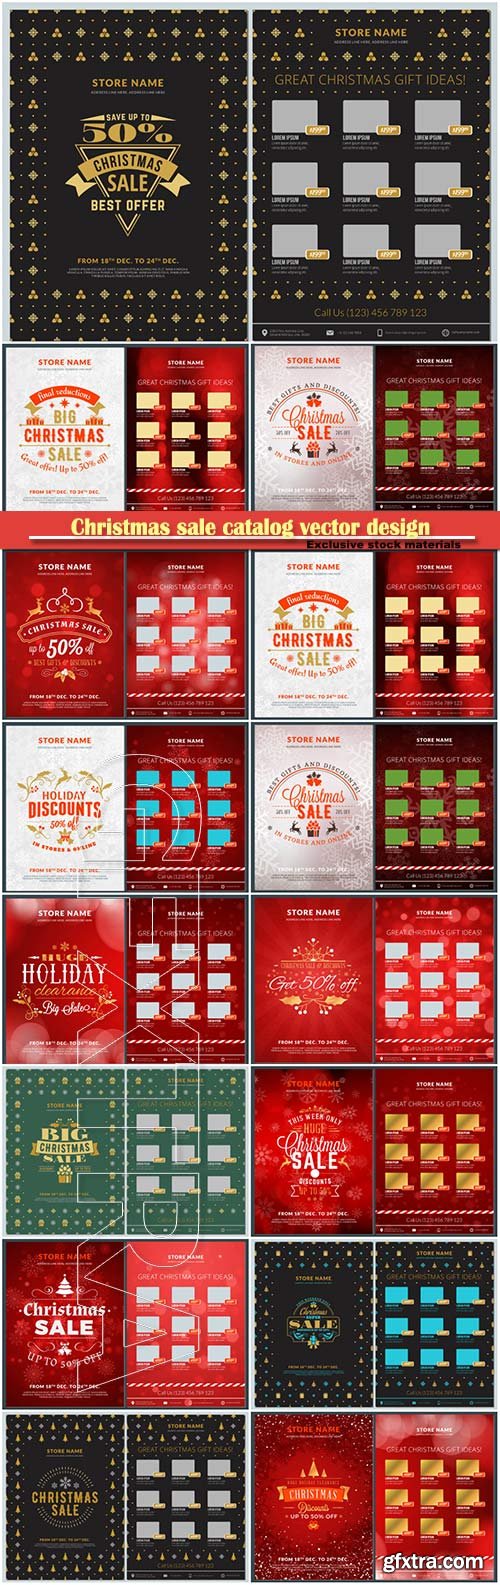 Christmas sale catalog vector design, business flyer template